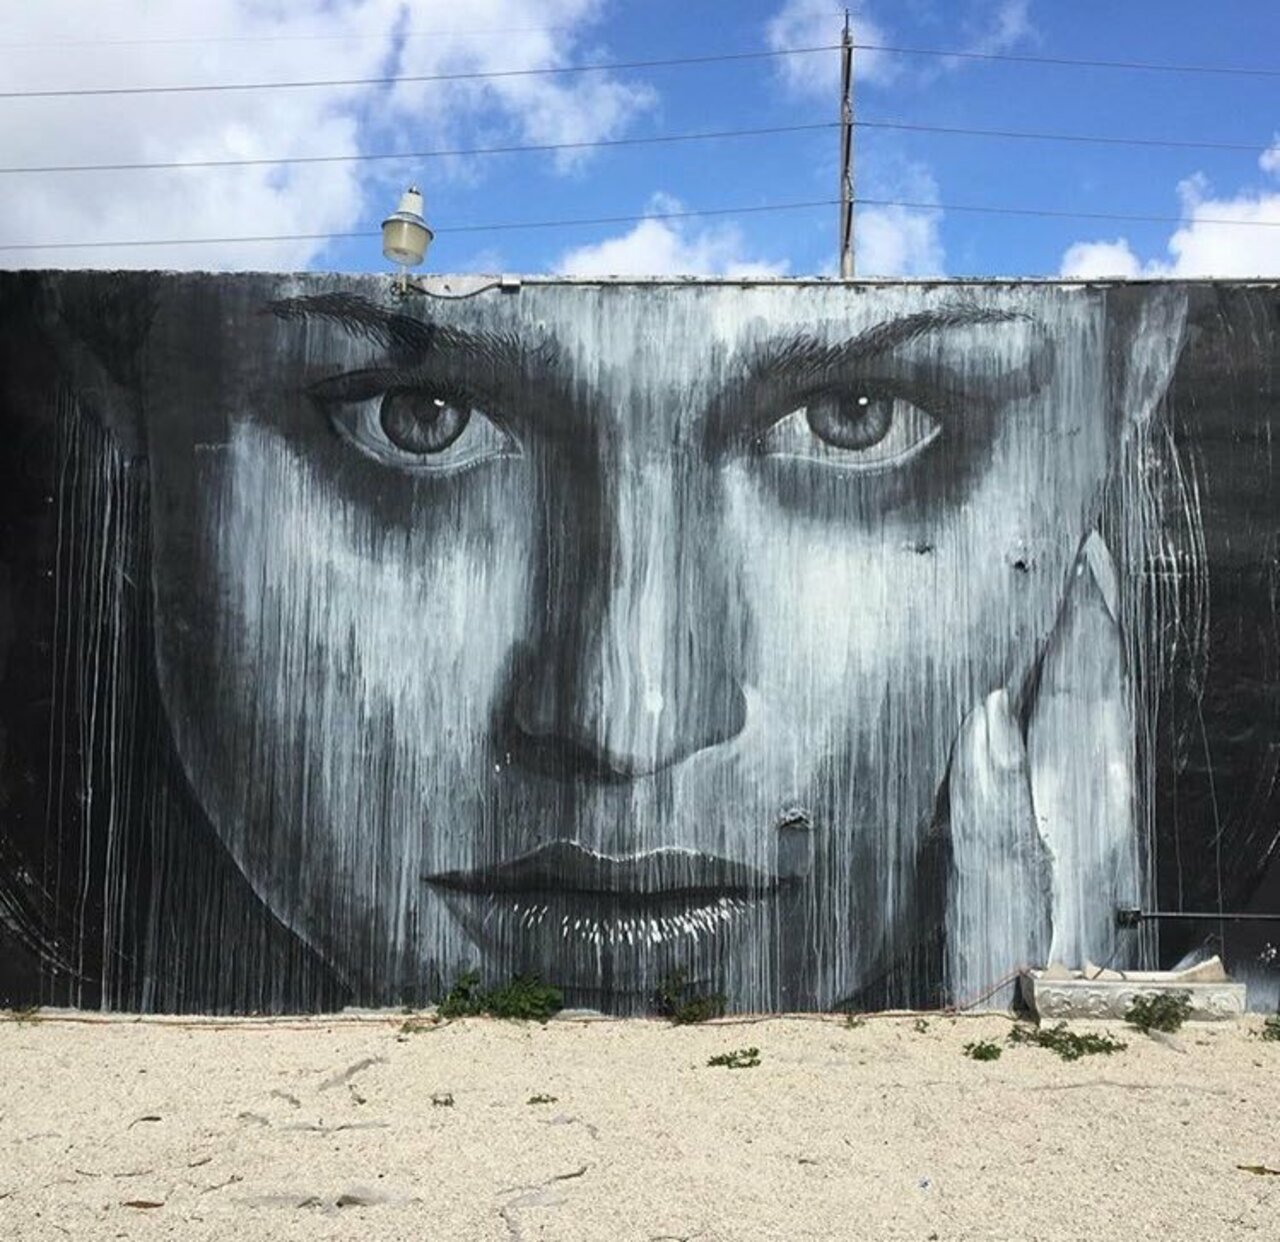 #mural By Rone #Miami #USA#art #graffiti #streetart #urbanart https://t.co/HgIiuQzIPY